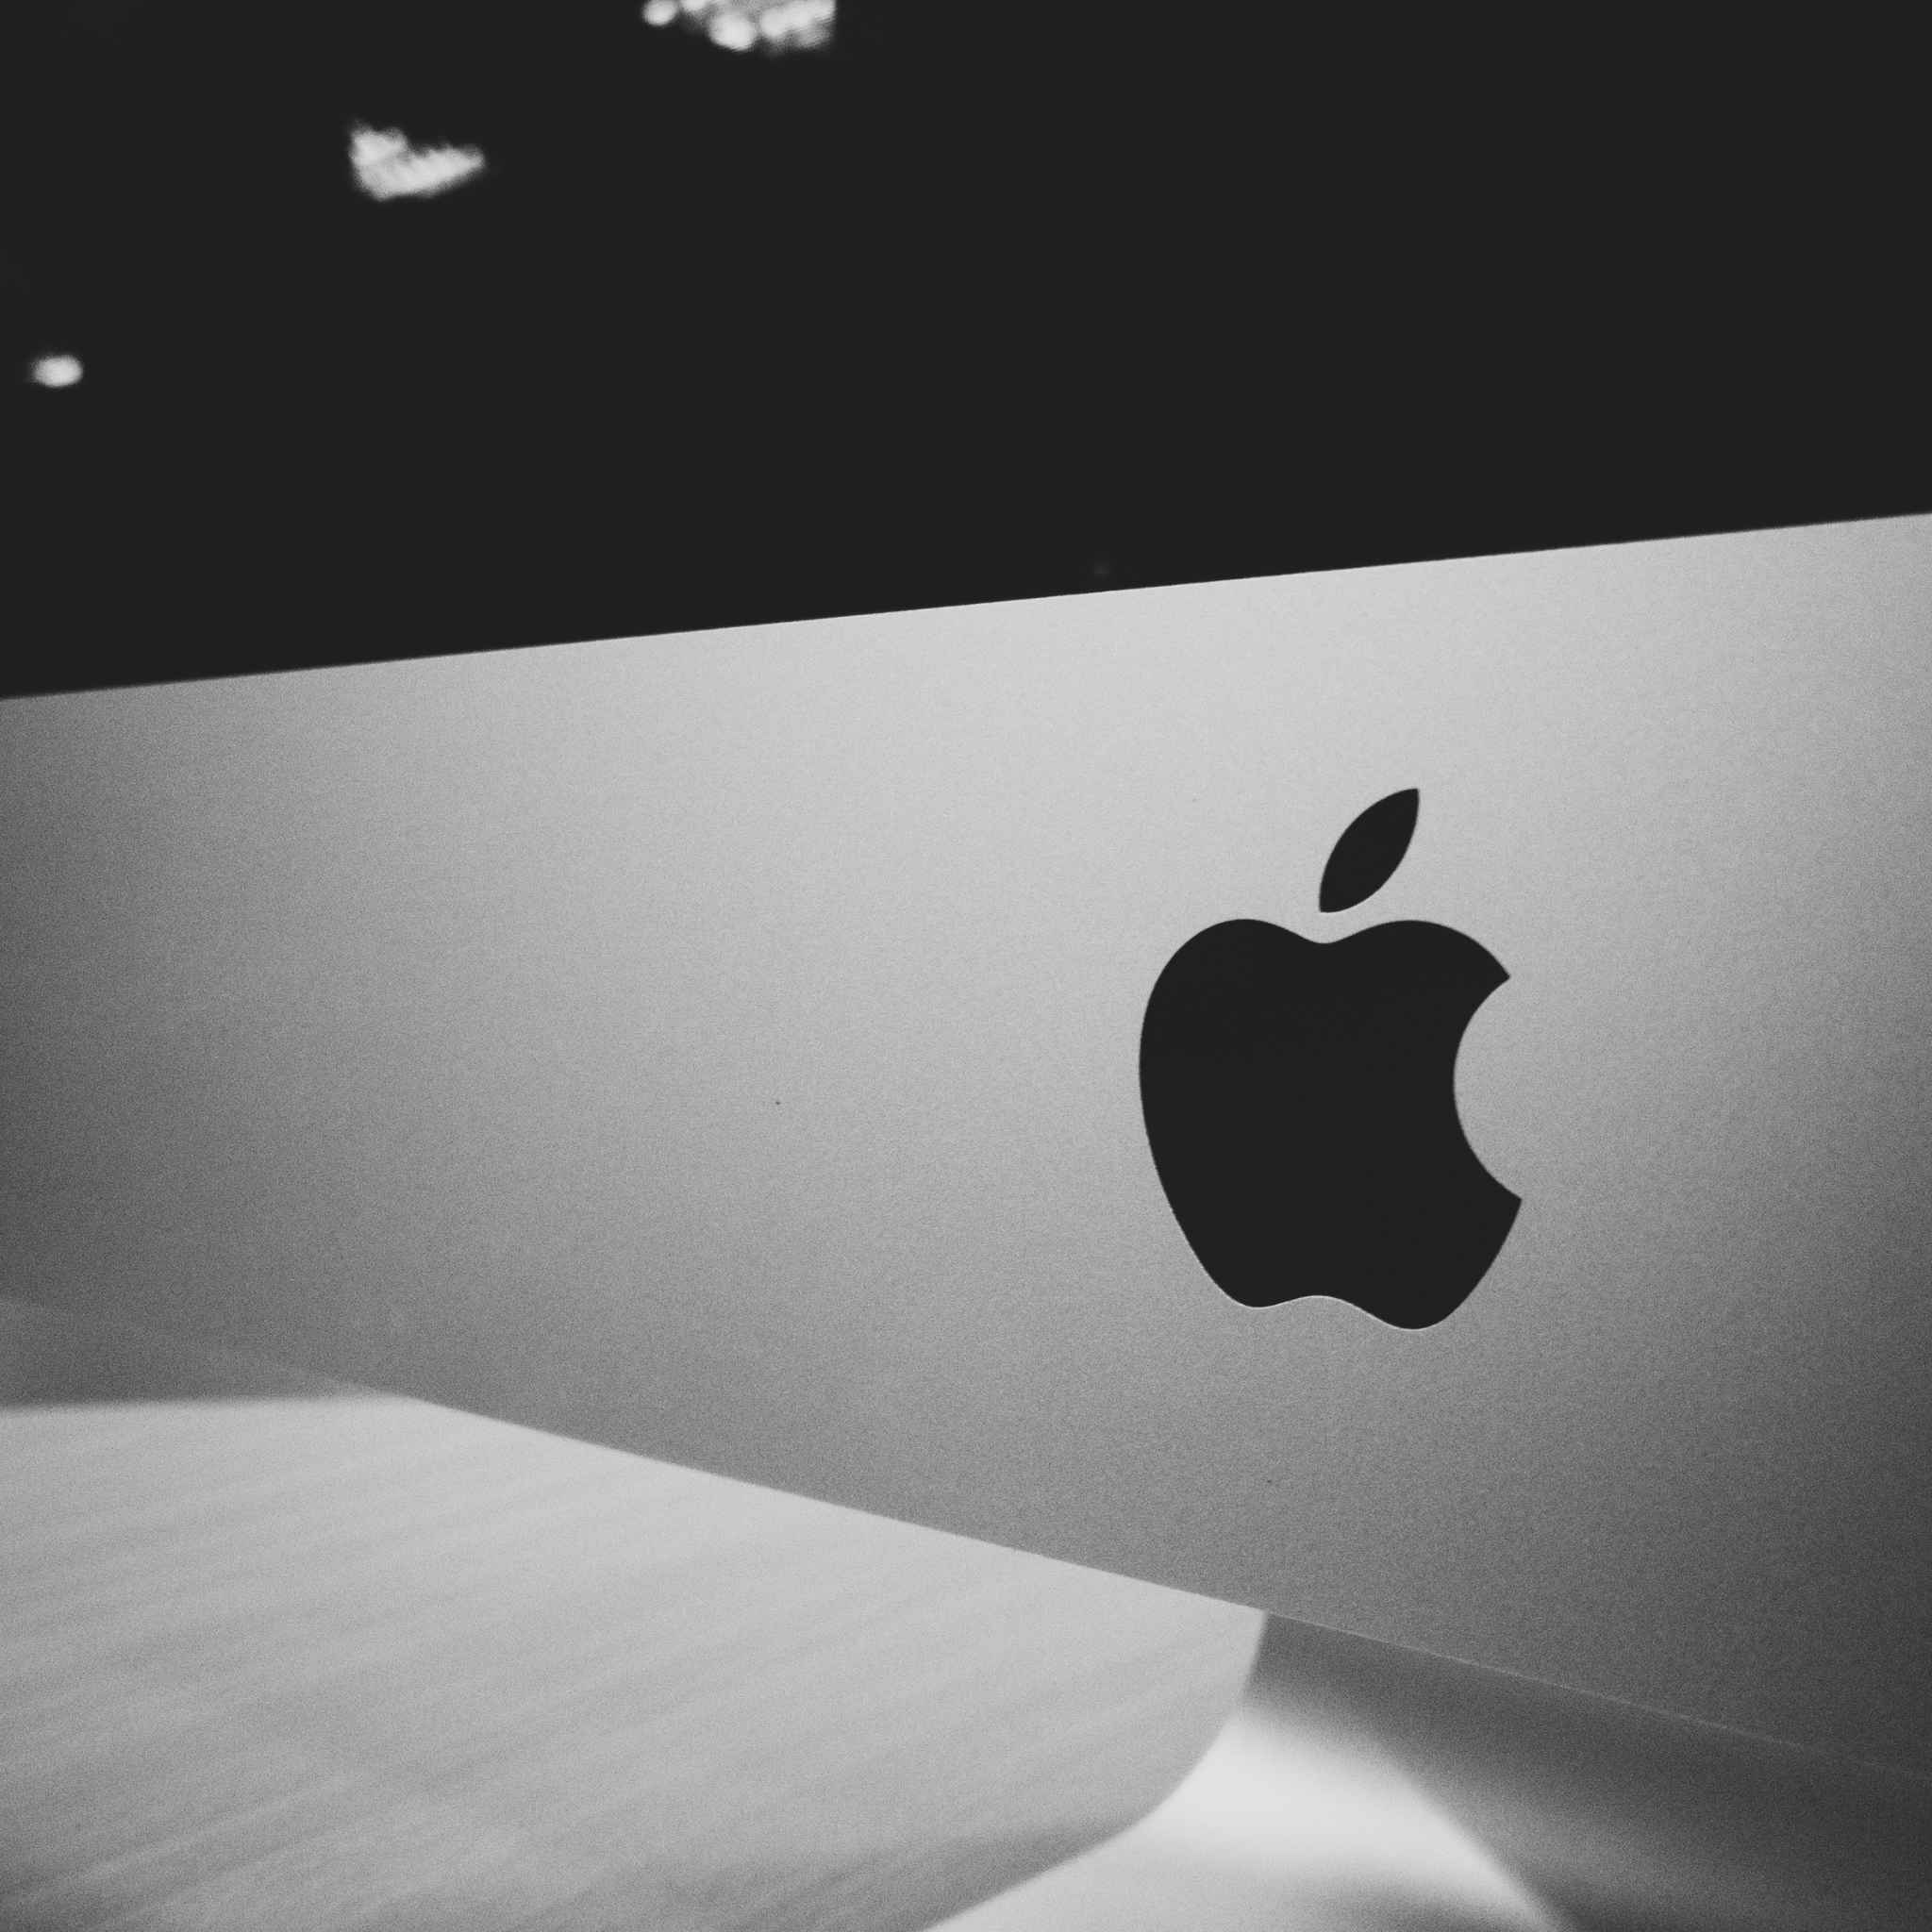 Close-up of Apple logo on iMac desktop computer.